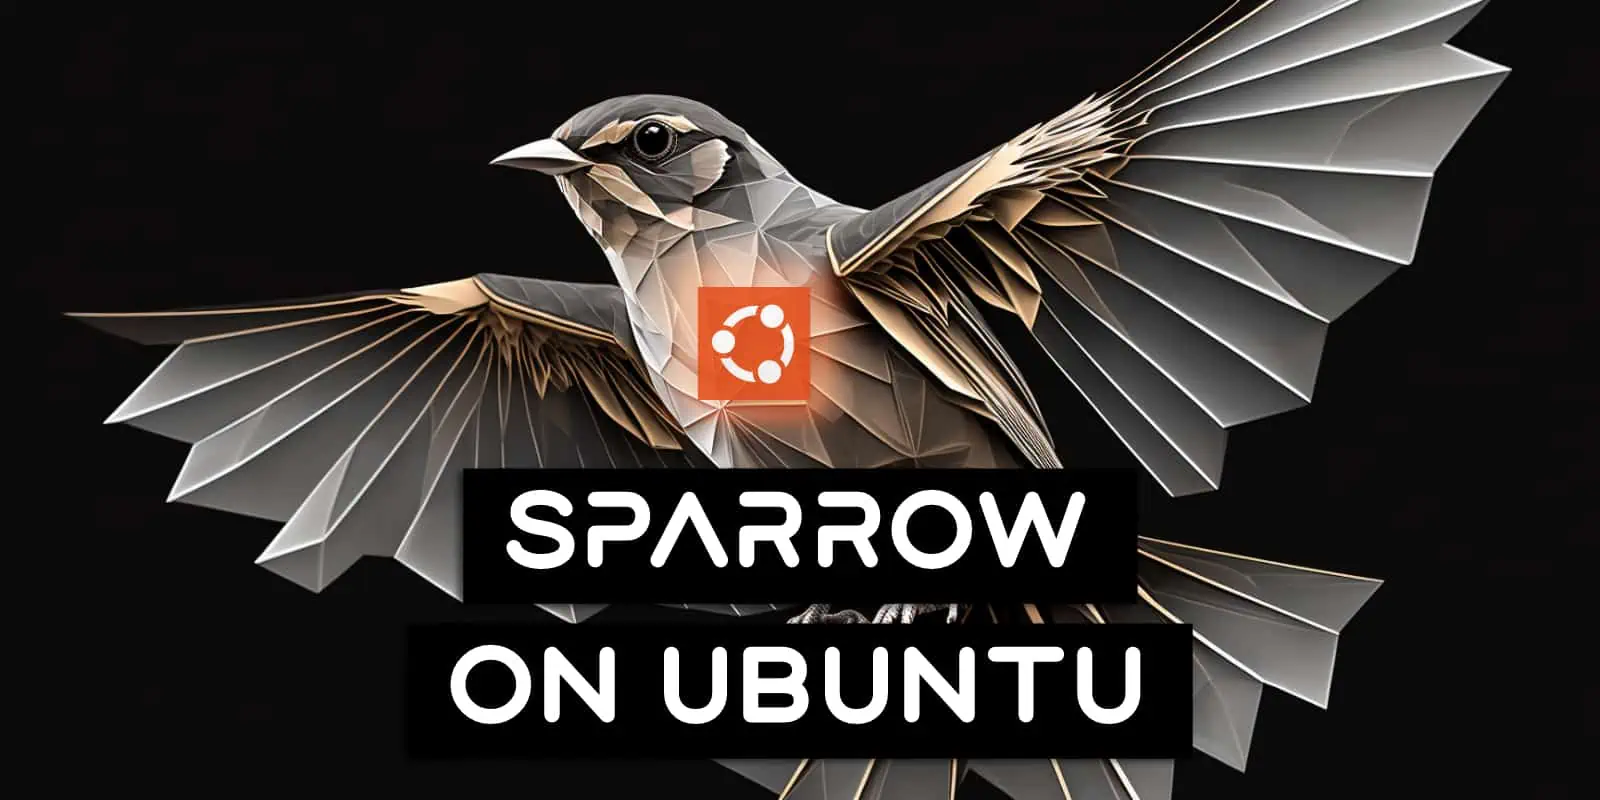 Install Sparrow Wallet On Ubuntu